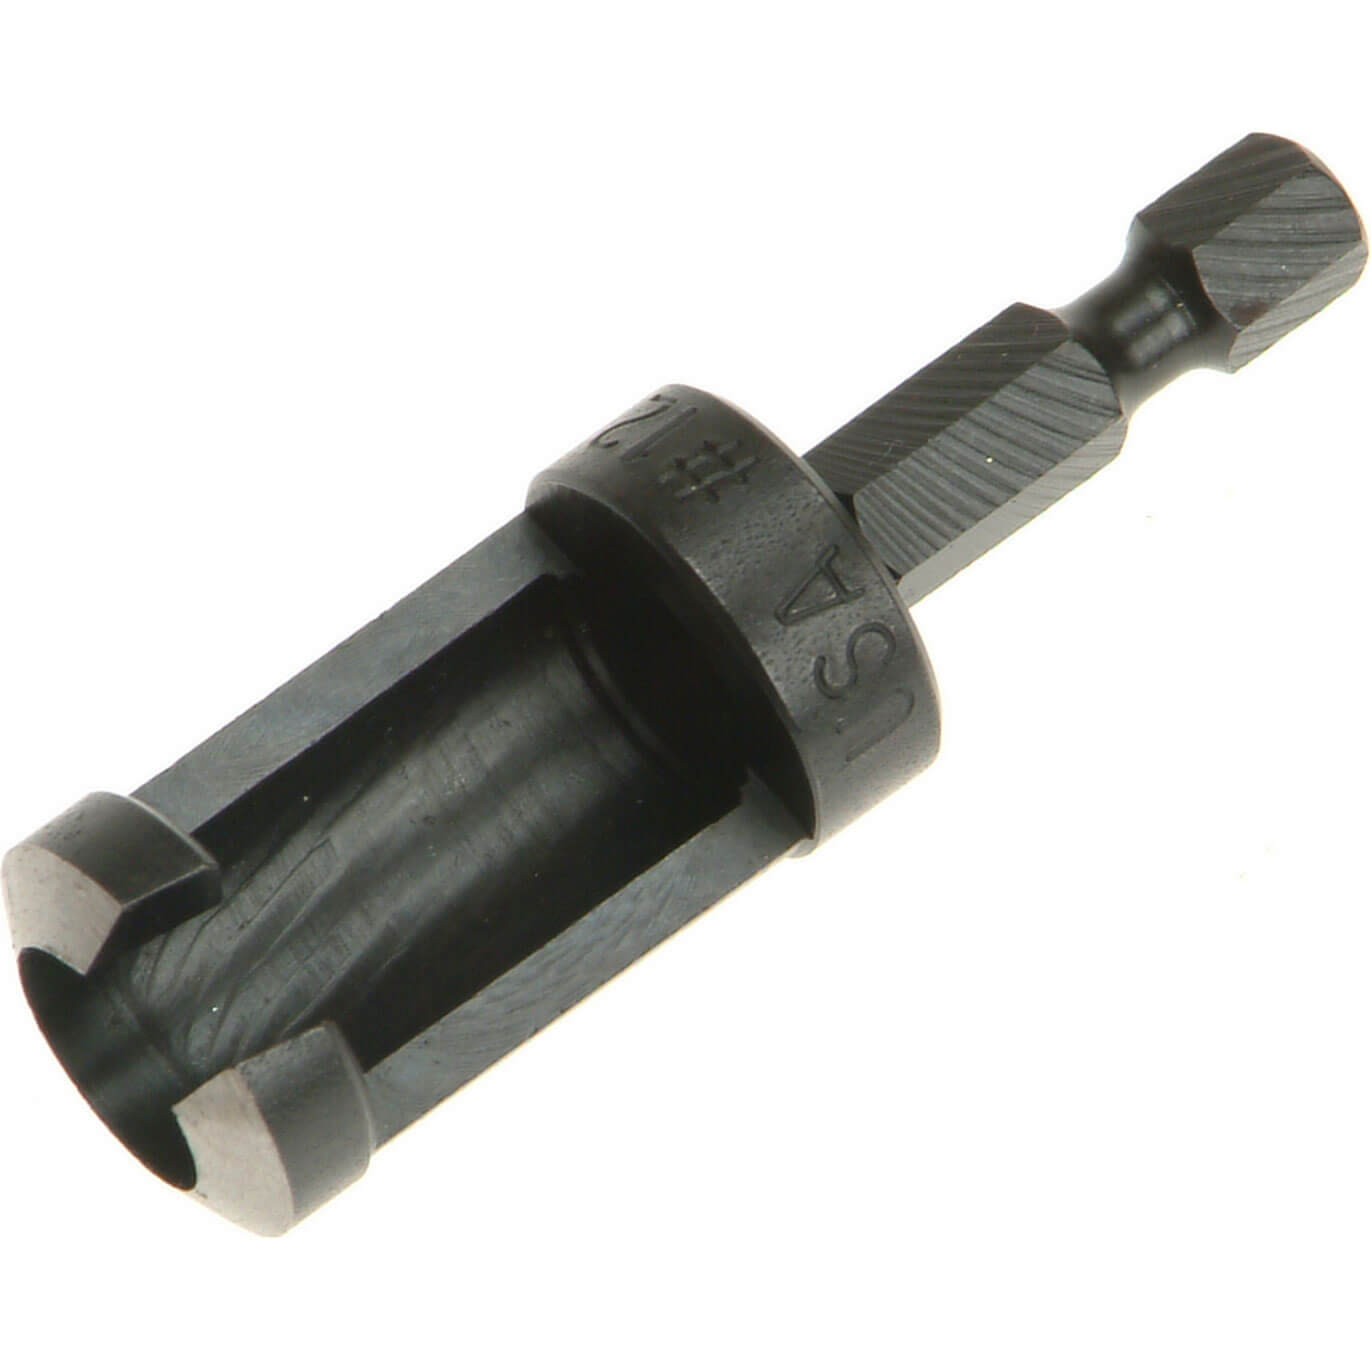 Photo of Disston Plug Cutter Size 12